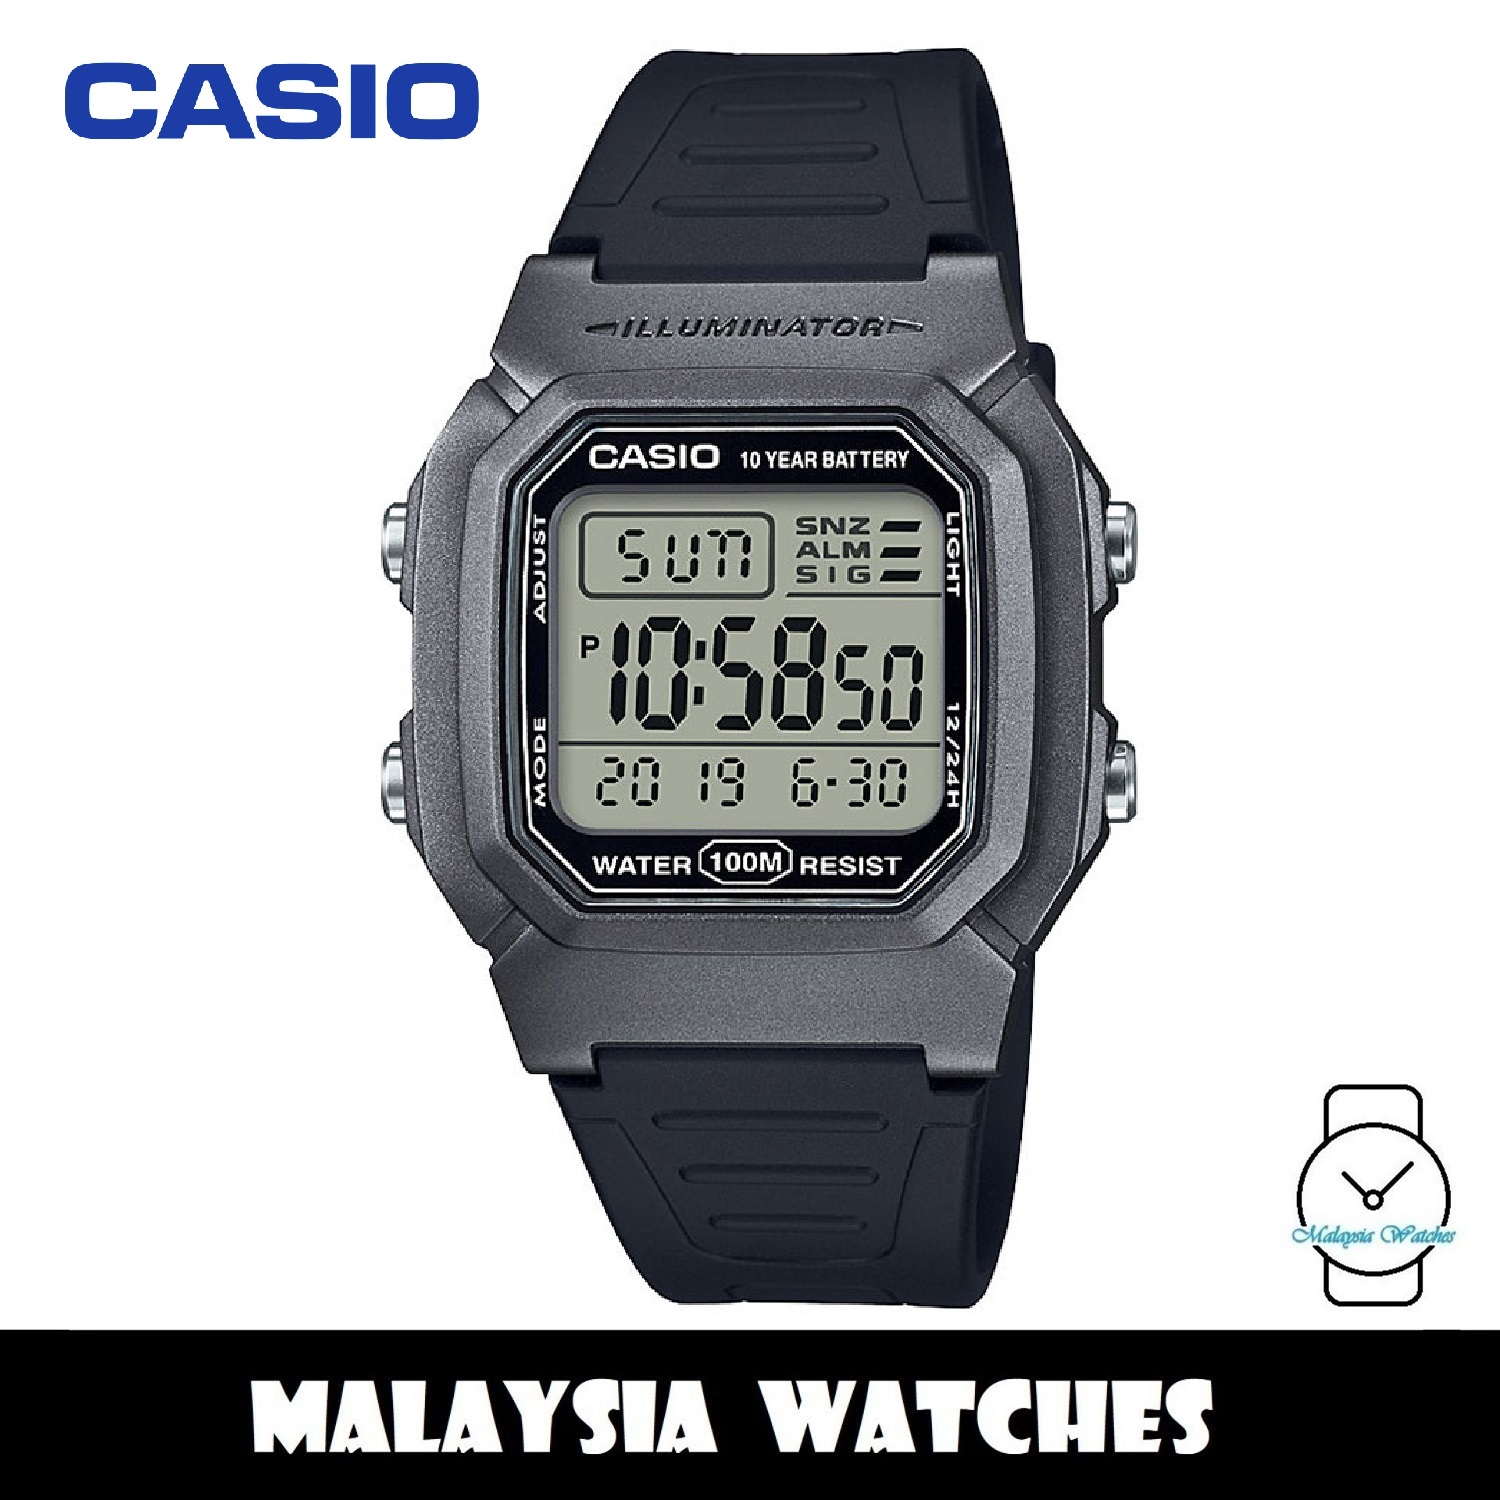 Khám phá đồng hồ Casio W-800HM-7AVDF